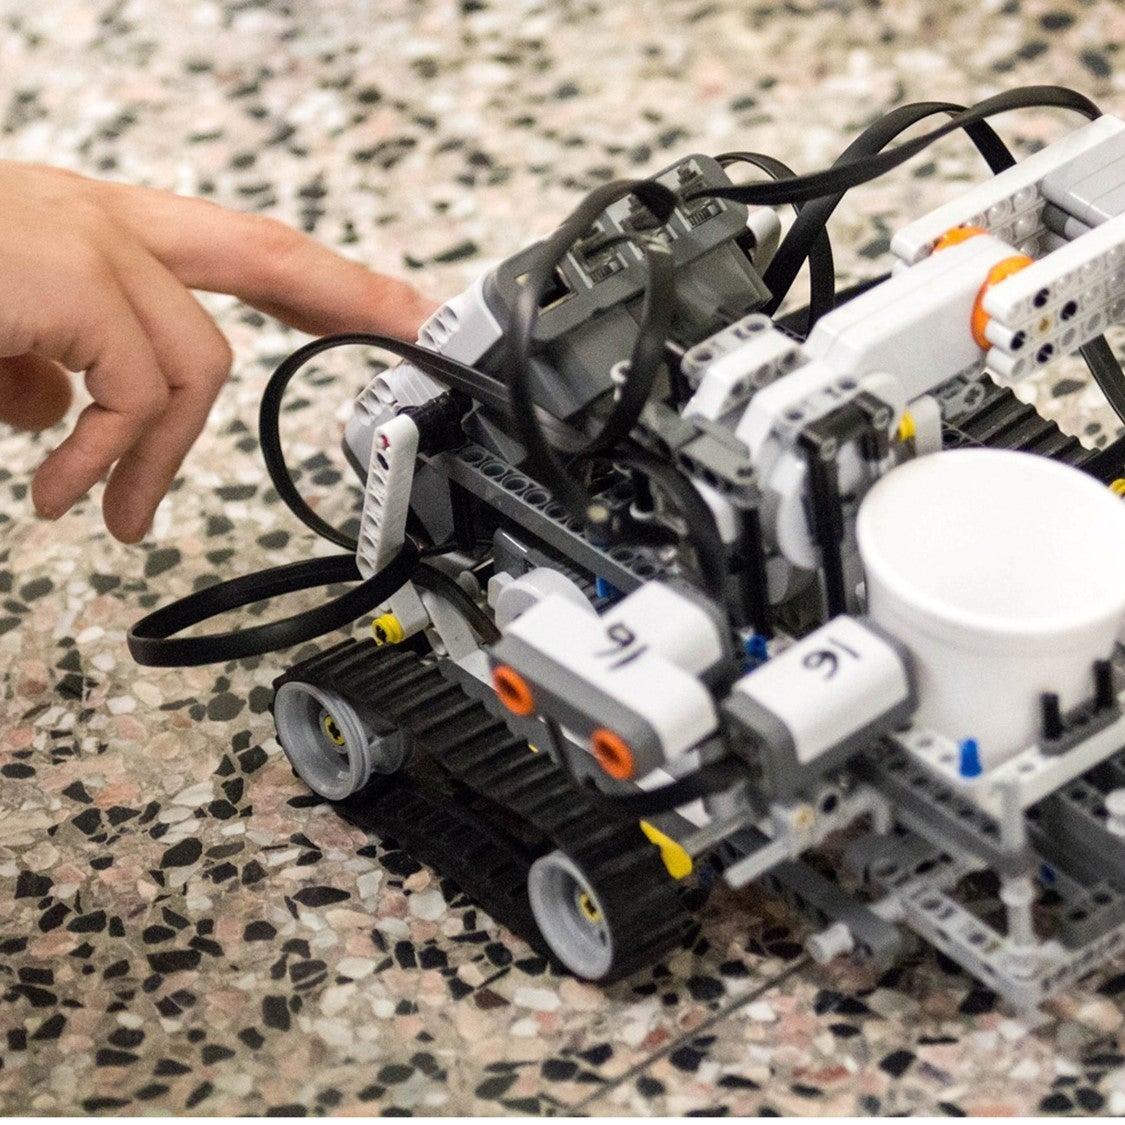 Students Work on a LEGO Car